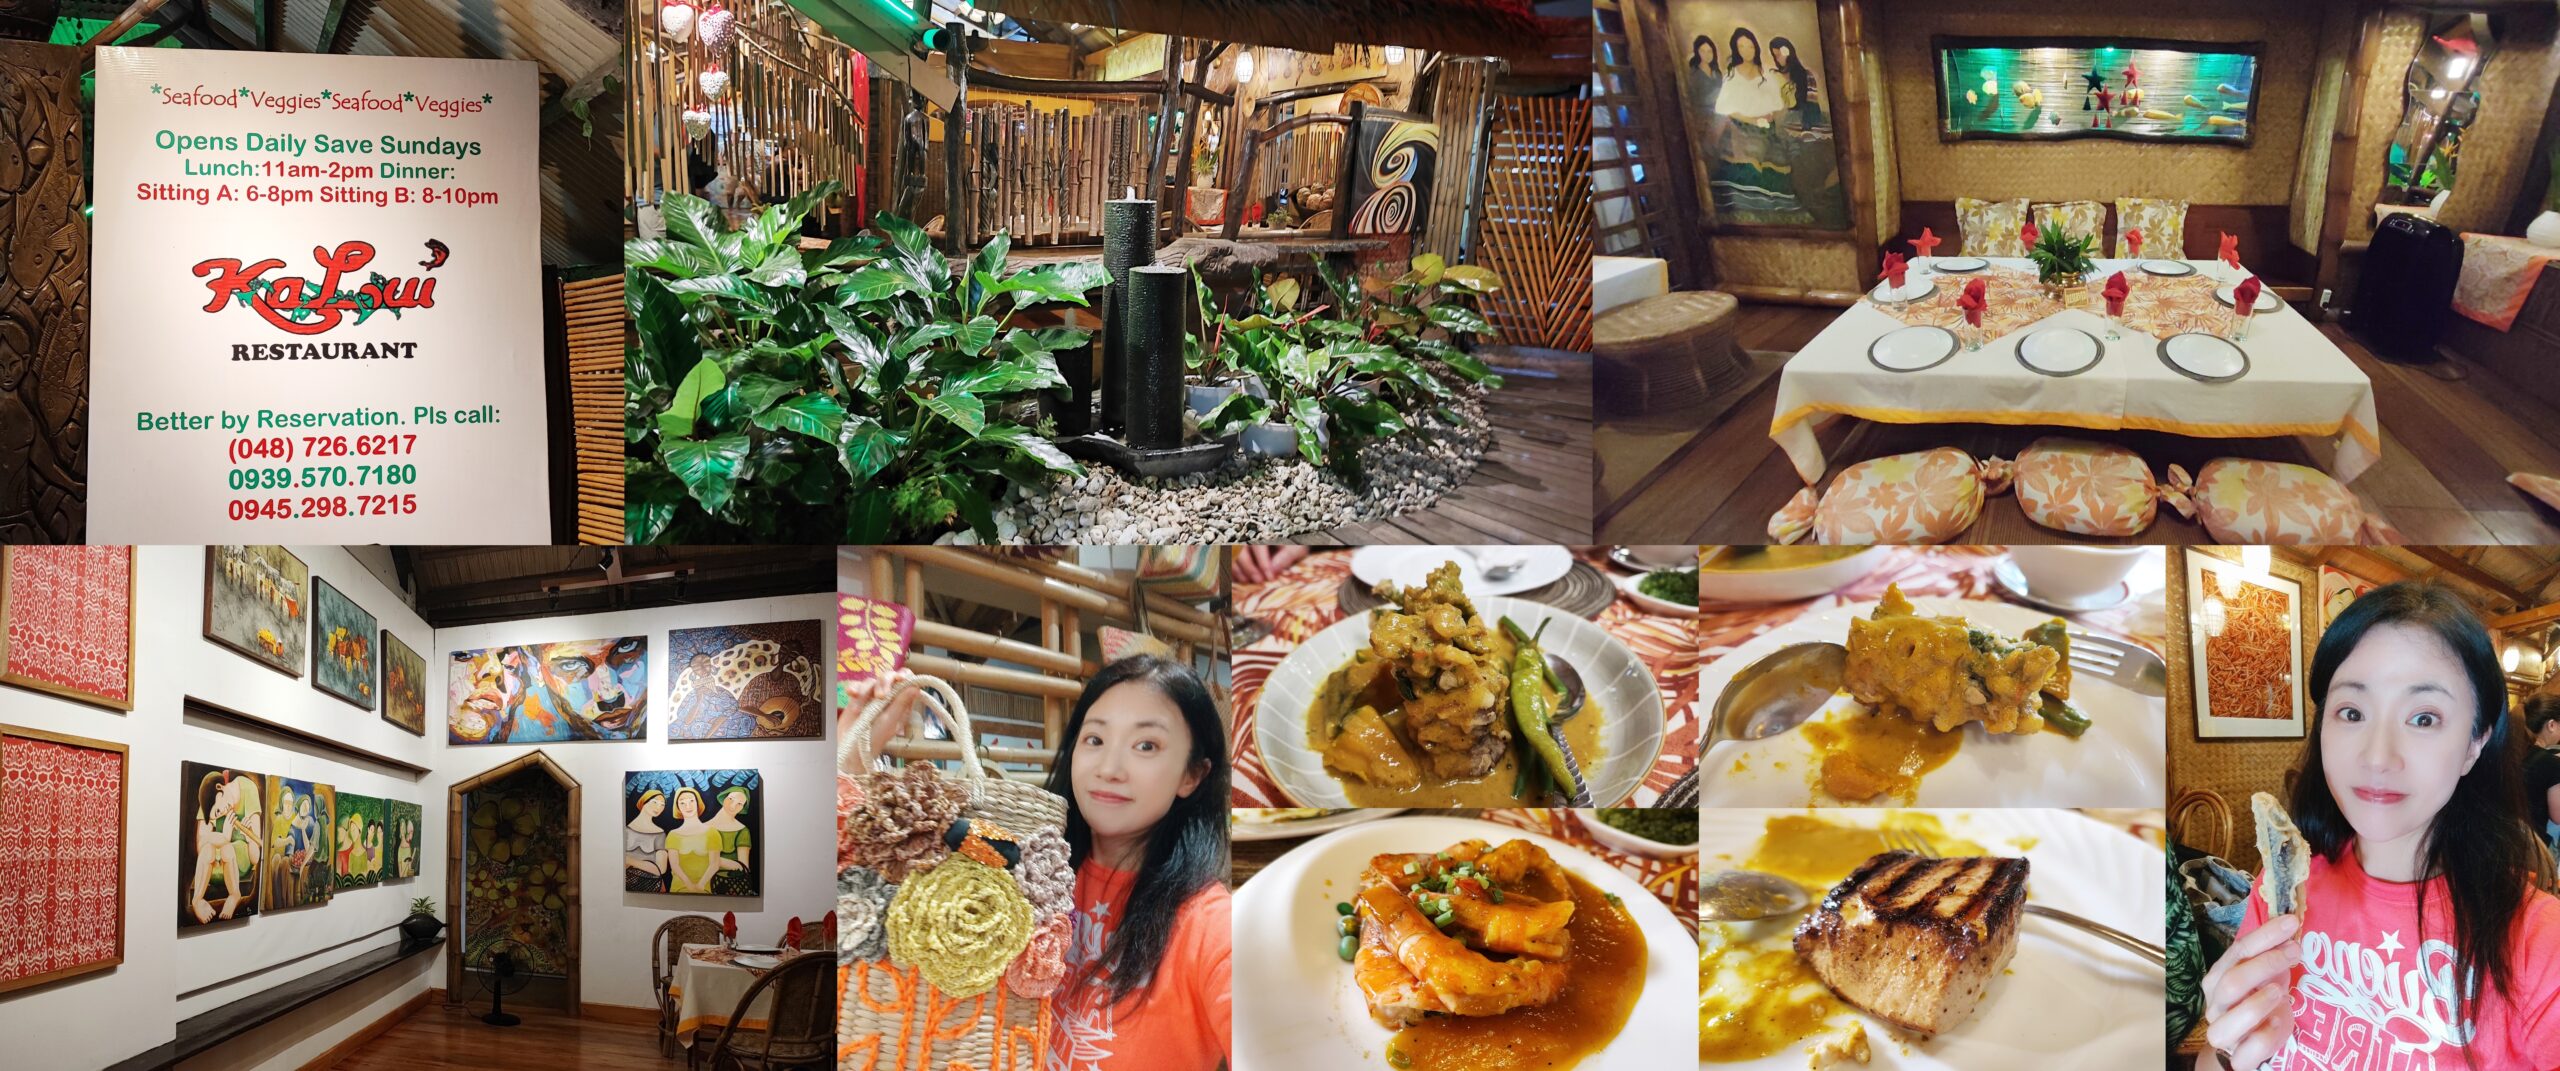 Kalui Restaurant,公主港Puerto Princesa,巴拉望Palawan,巴拉望餐廳,菲律賓旅遊,藝術餐廳,西班牙餐廳